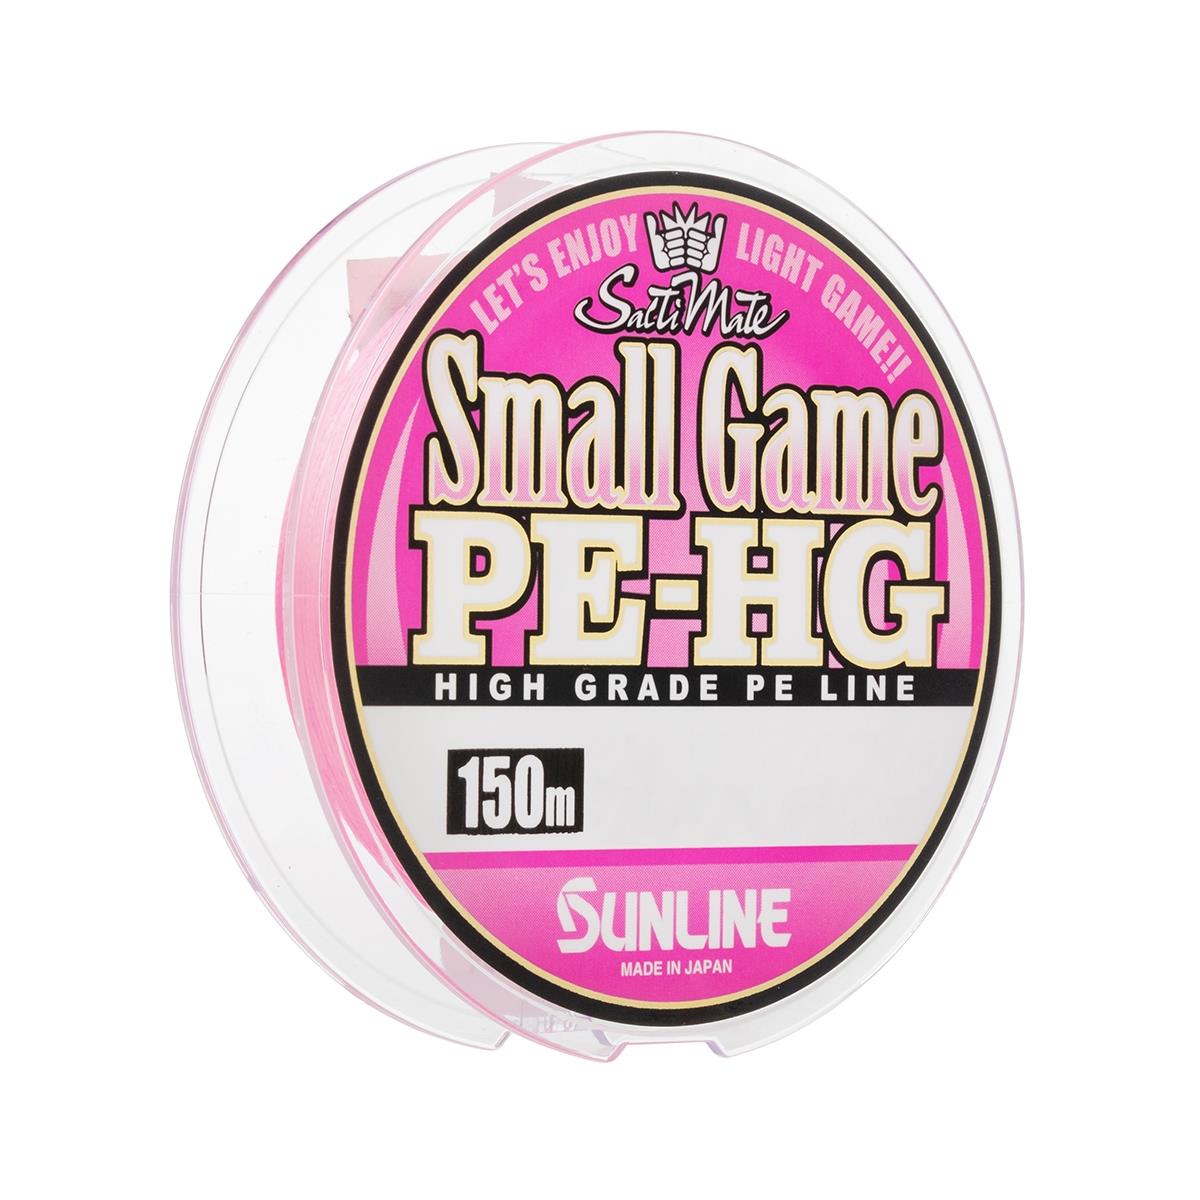 Шнур NEW SMALL GAME PE HG 150M 5LB/#0.3 Sunline шнур зубр полиамидный плетеный повышенной нагрузки без сердечника d 5 катушка 700м